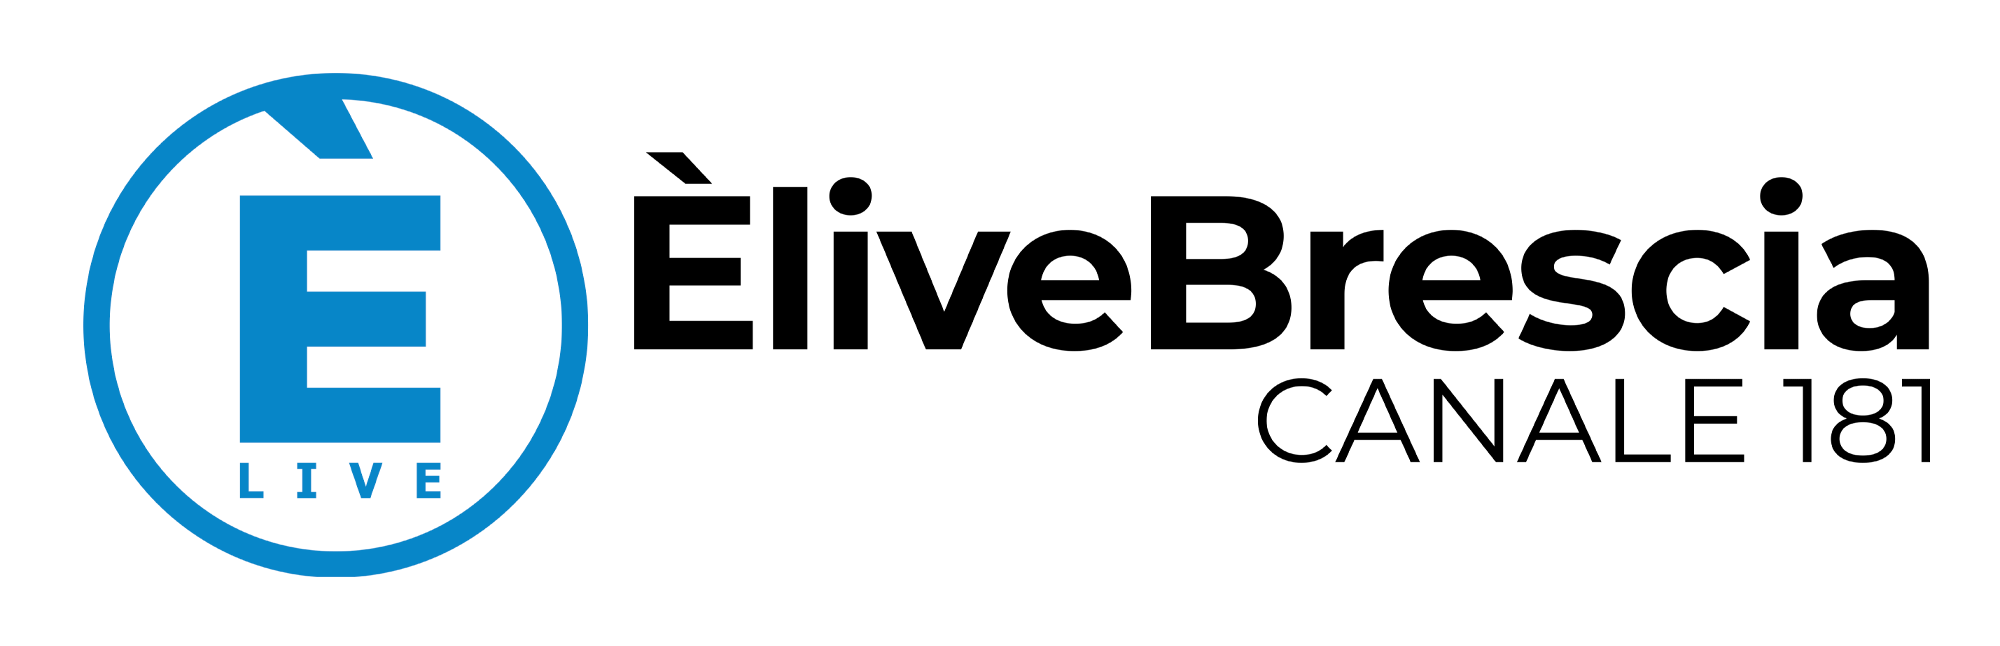 Logo Elive Brescia canale 181